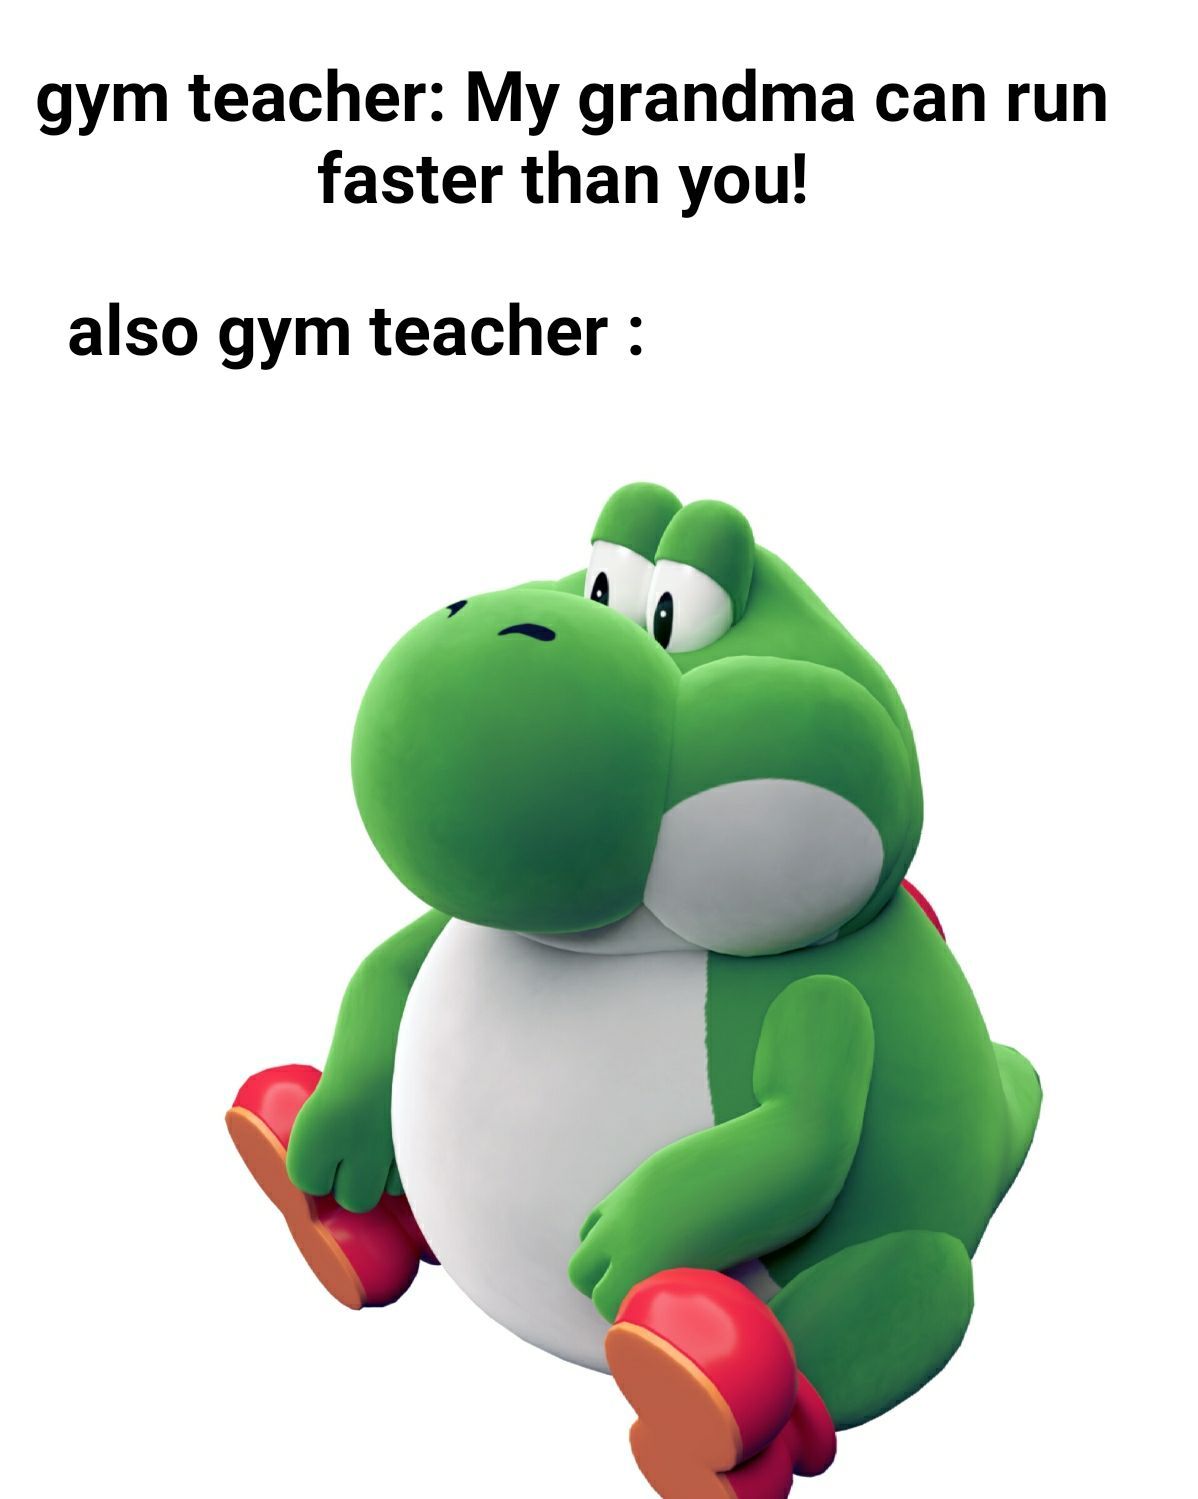 fat yoshi - gym teacher My grandma can run faster than you! also gym teacher